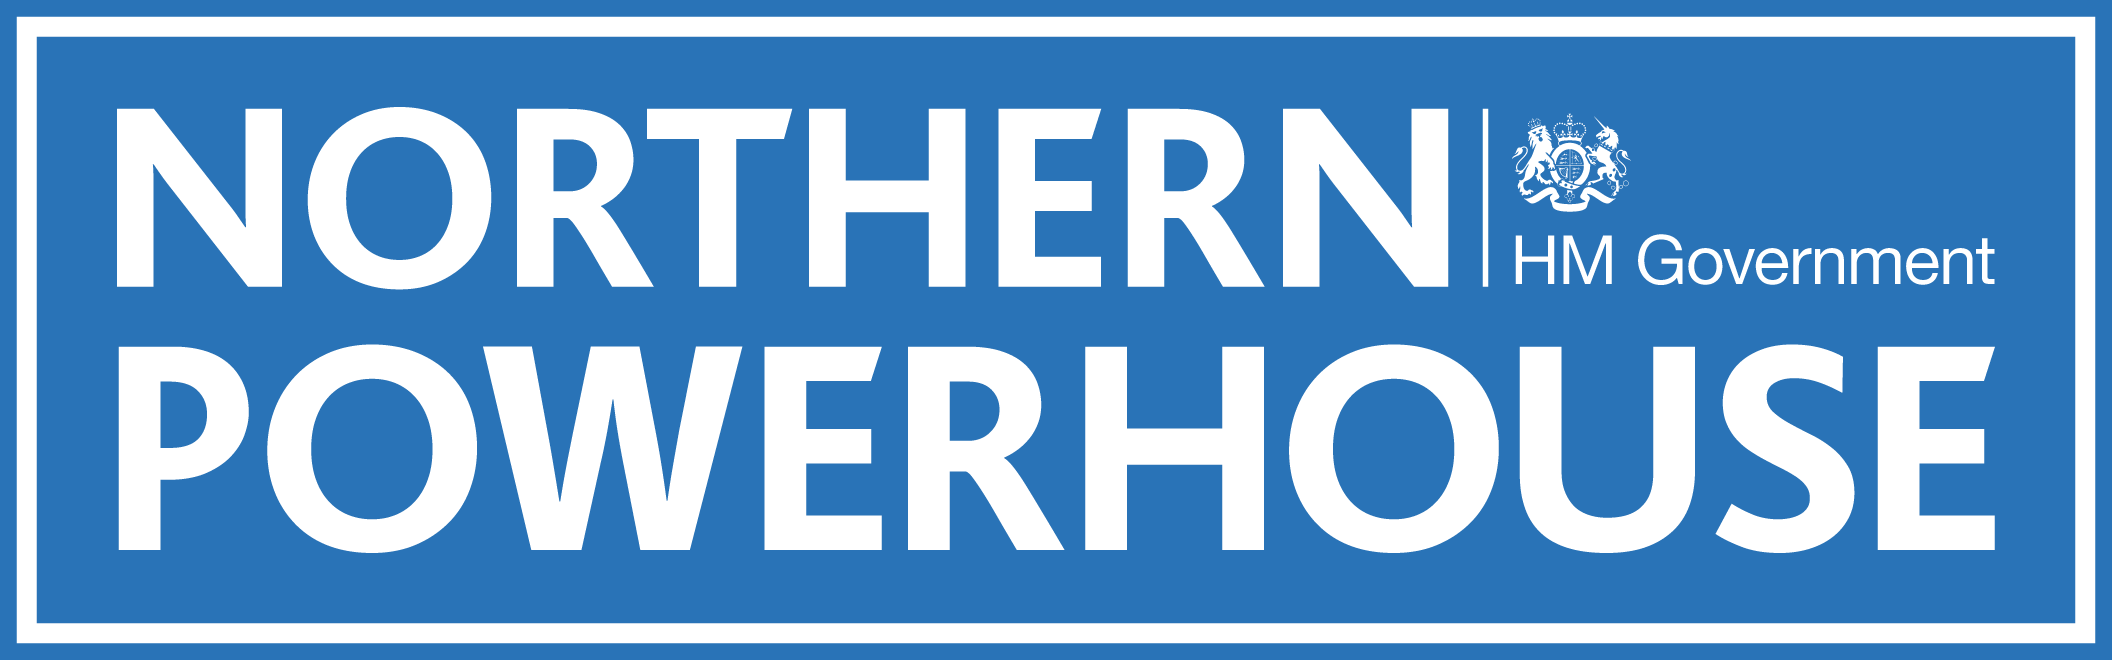 Northern Powerhouse blue logo